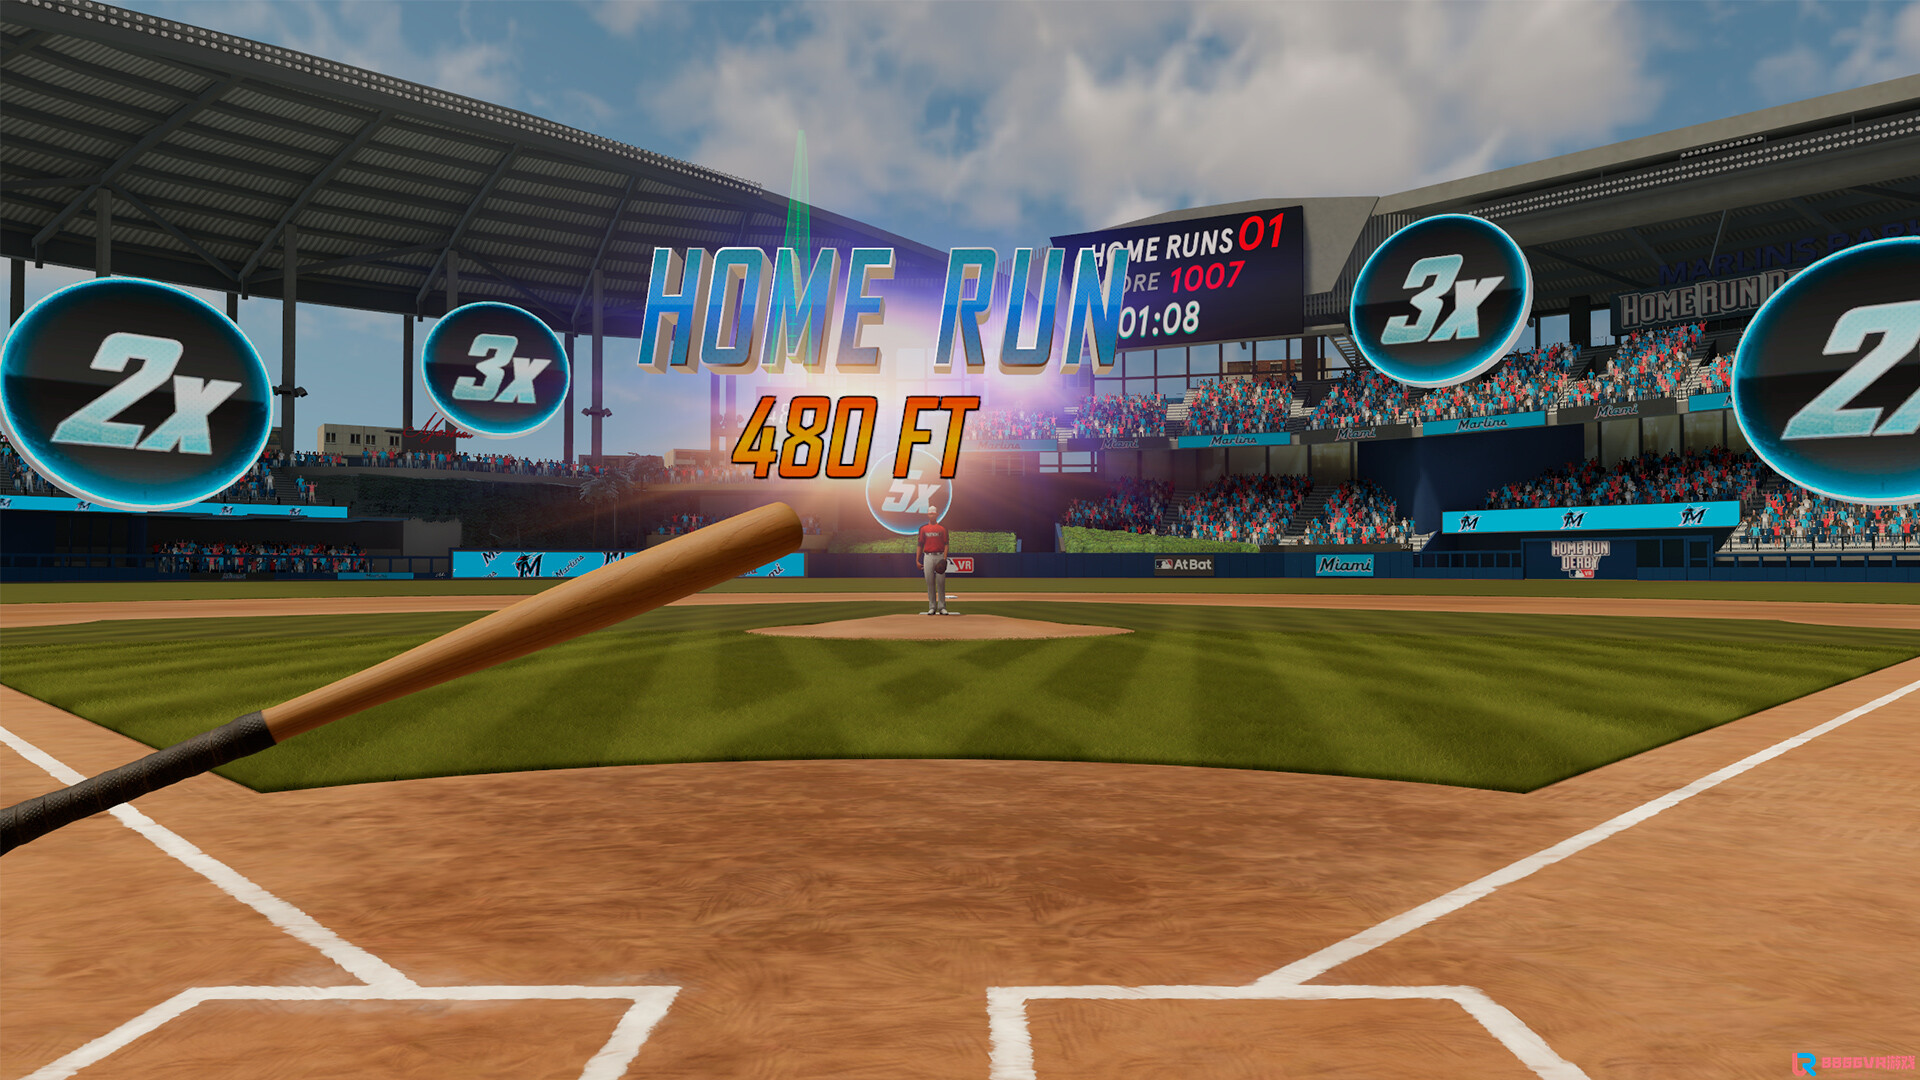 [Oculus quest]美国职棒大联盟本垒打 (MLB Home Run Derby VR)9506 作者:yuanzi888 帖子ID:4882 